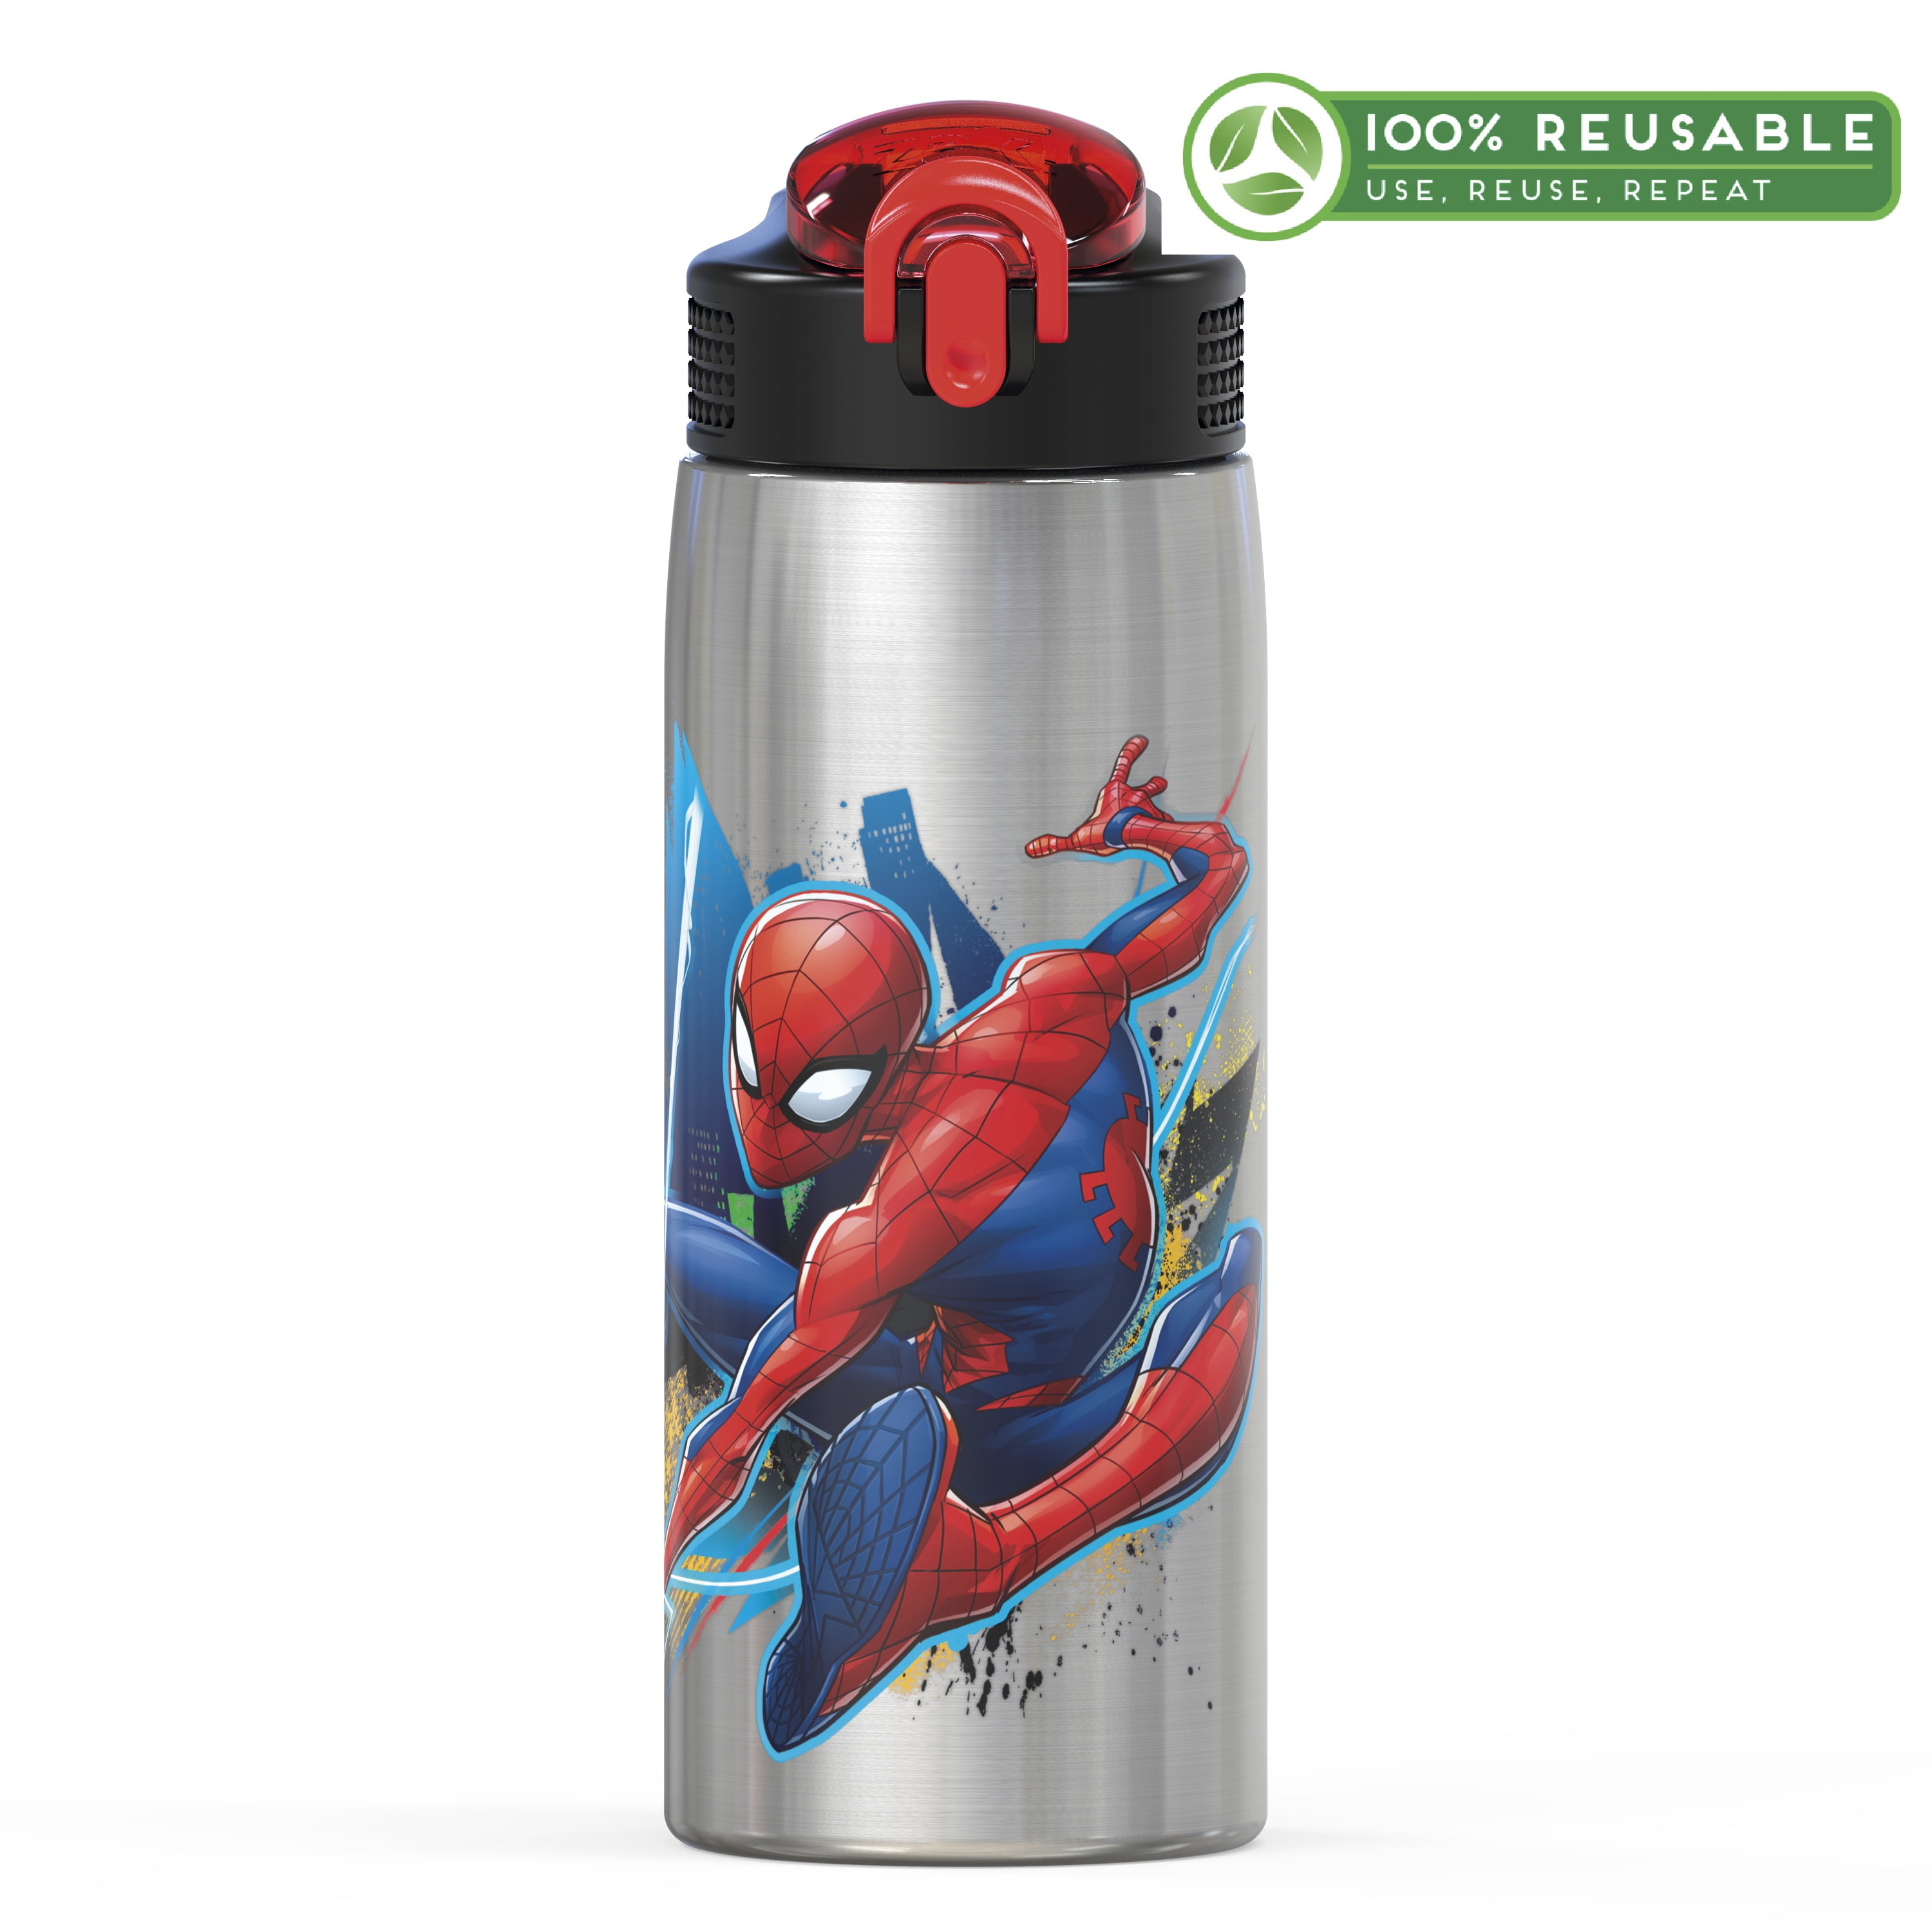 Zak Designs 27 oz. Marvel Stainless Steel Water Bottle with Flip-up Straw  Spout, Spider Man 